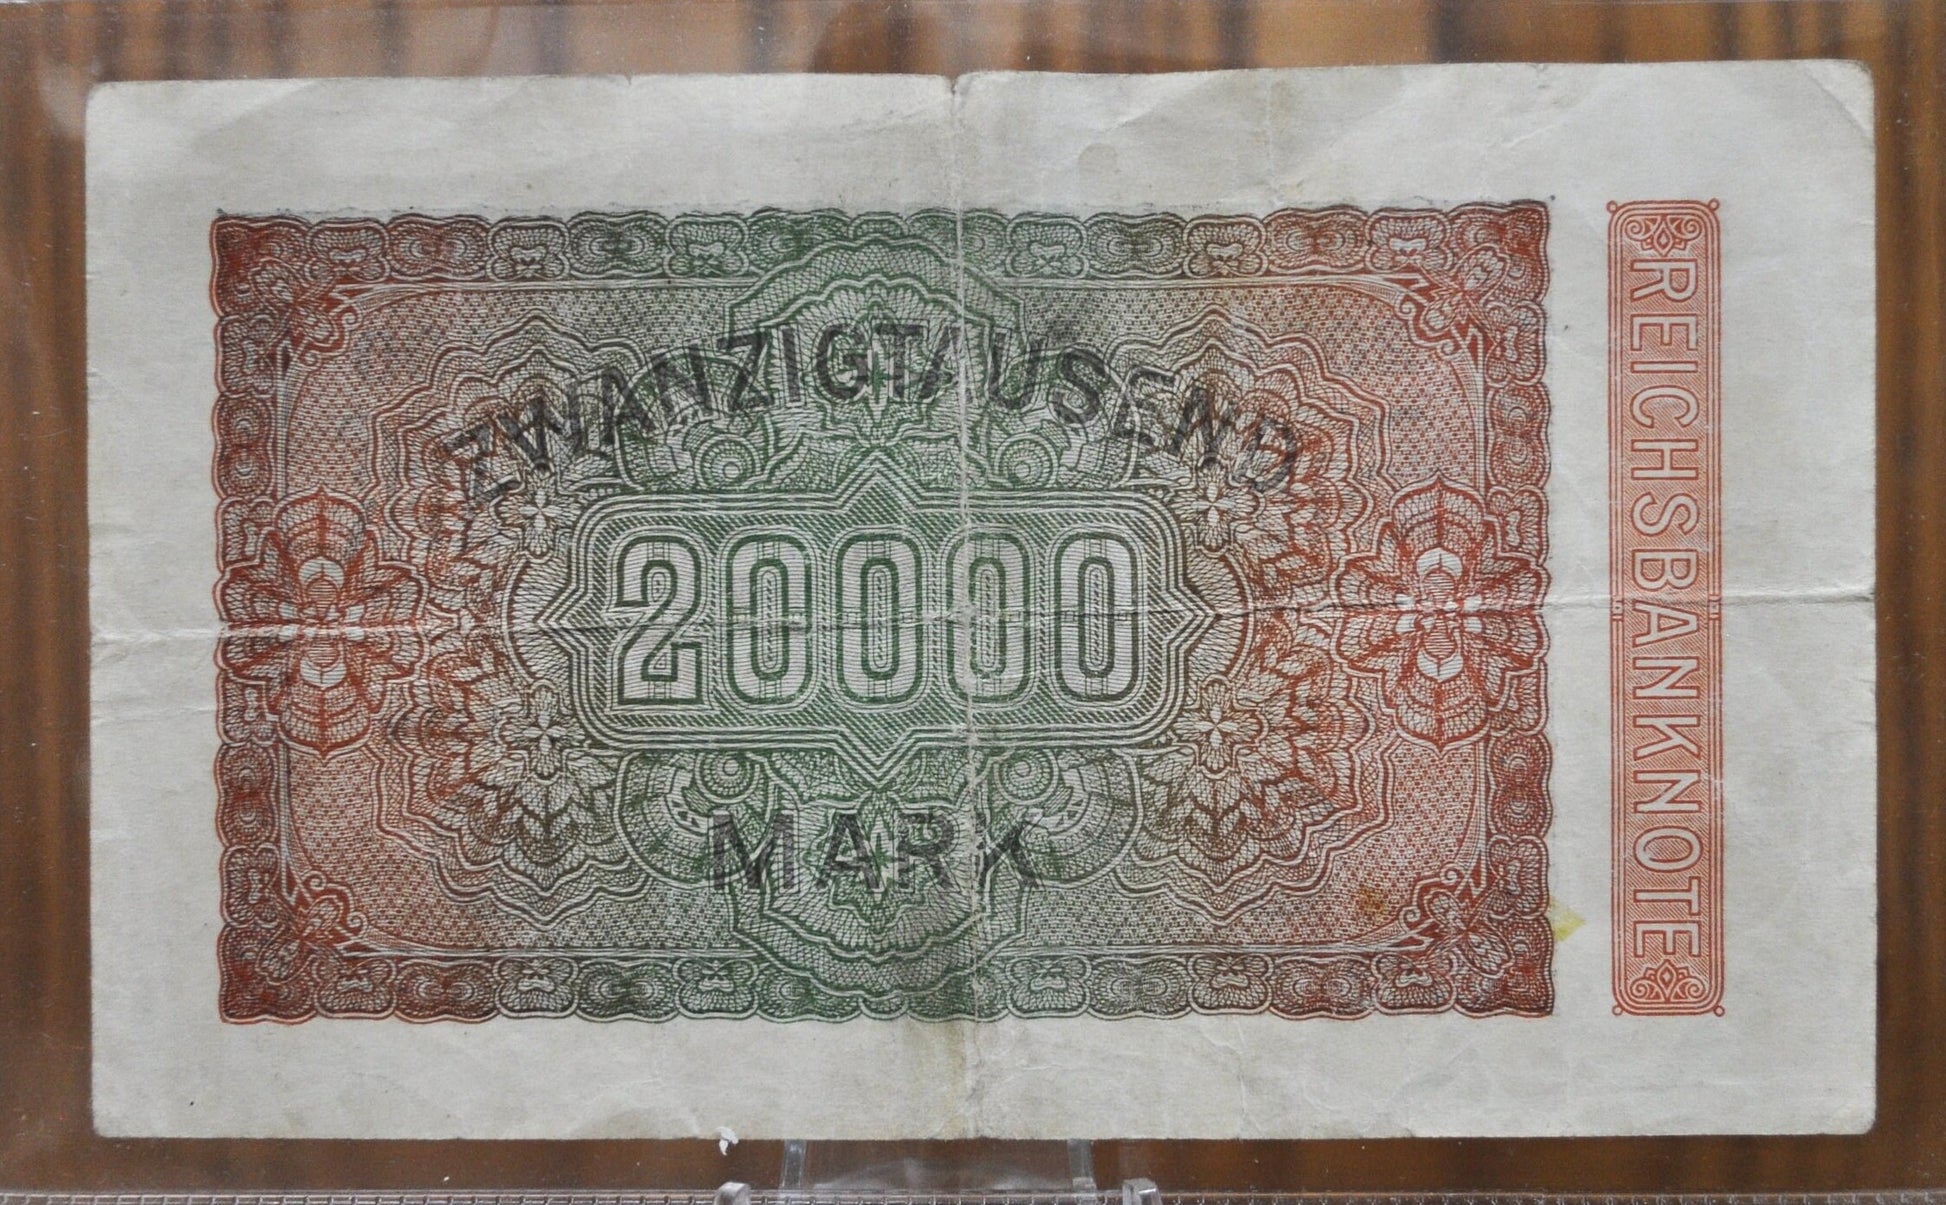 1923 20,000 Mark German Paper Note - Reichsbanknote - Great Condition - WWI era note - Twenty Thousand Mark Note